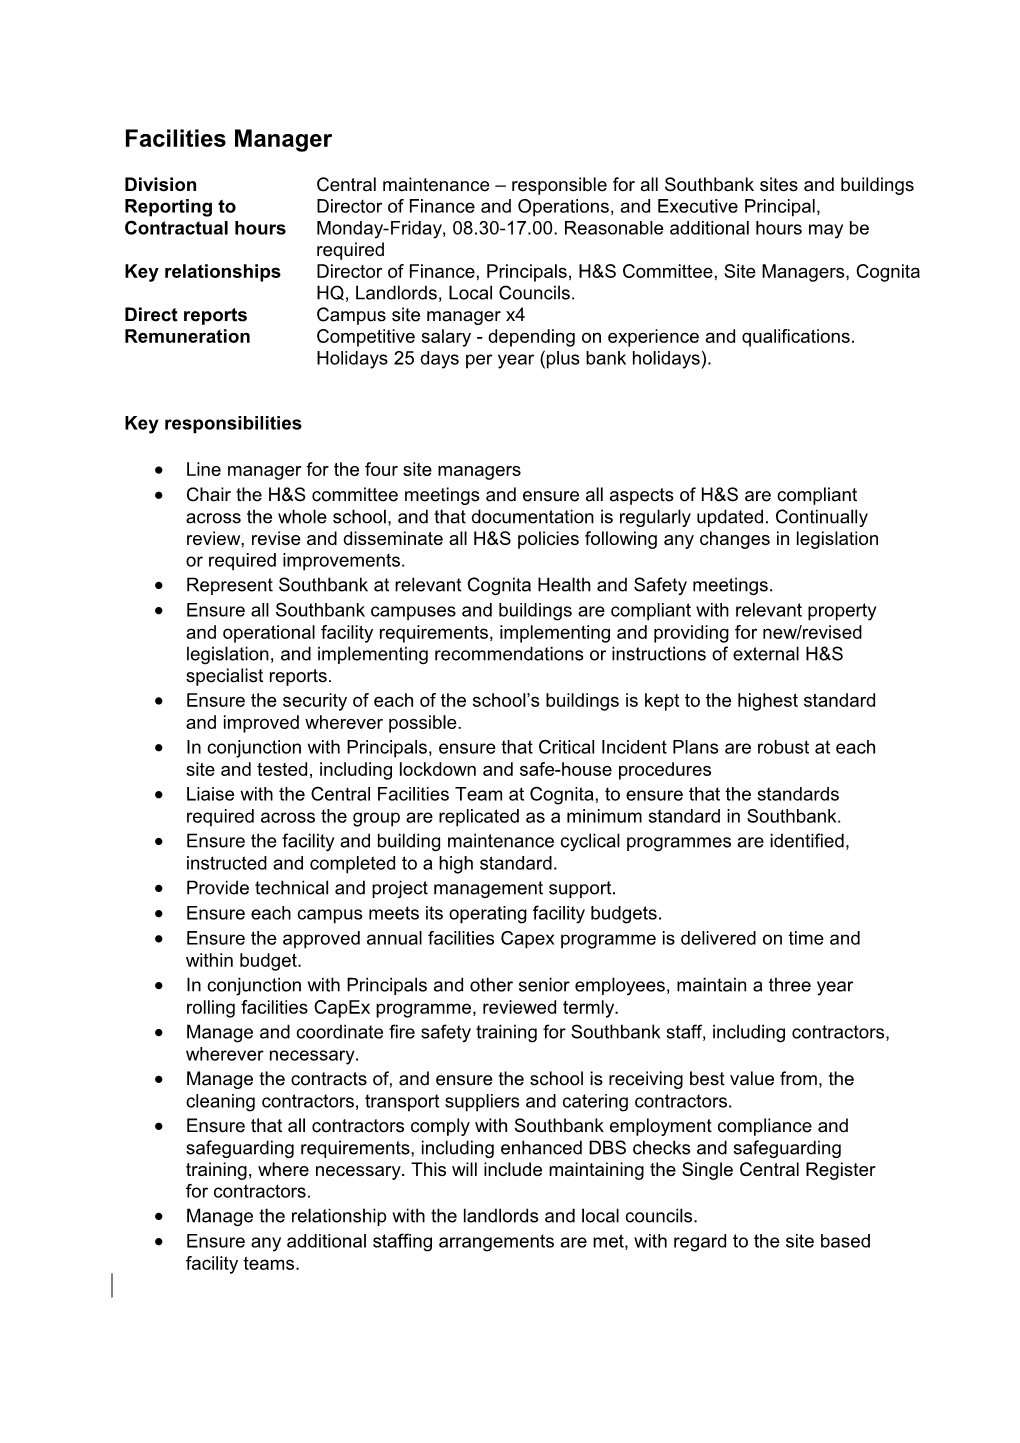 Southbank International School Job Description: Facilities Manager